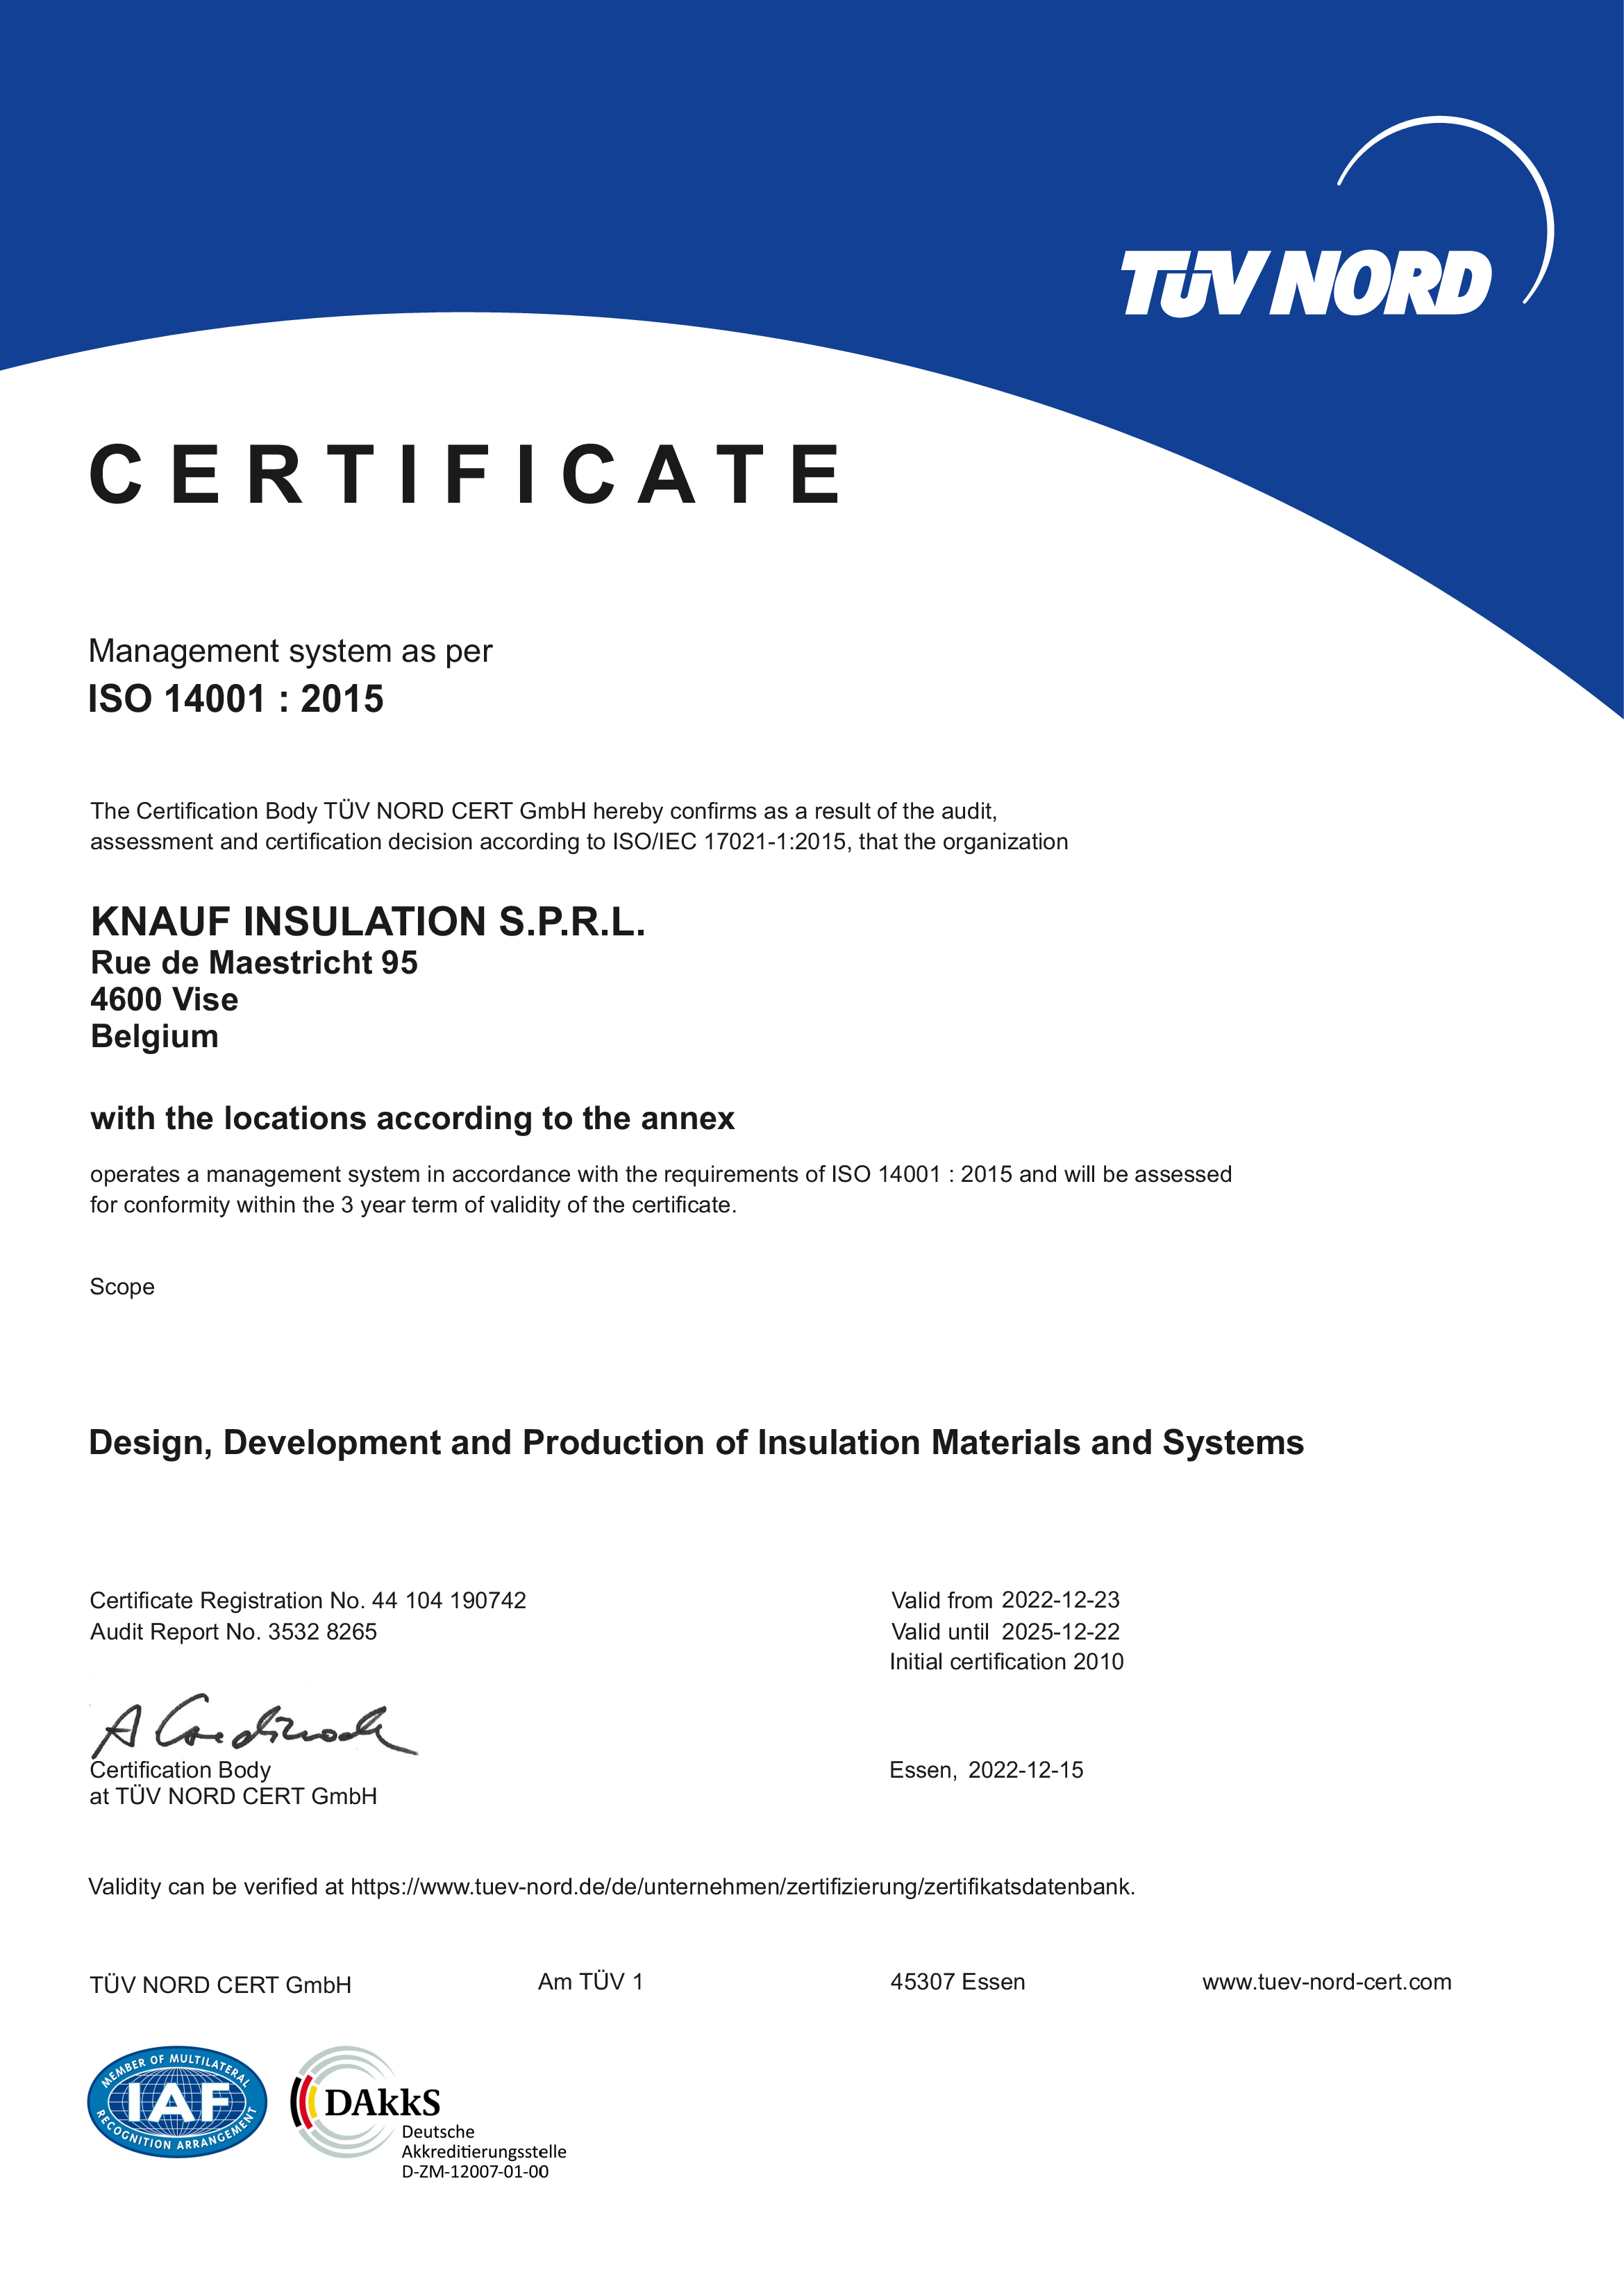 Knauf Insulation ISO 14001